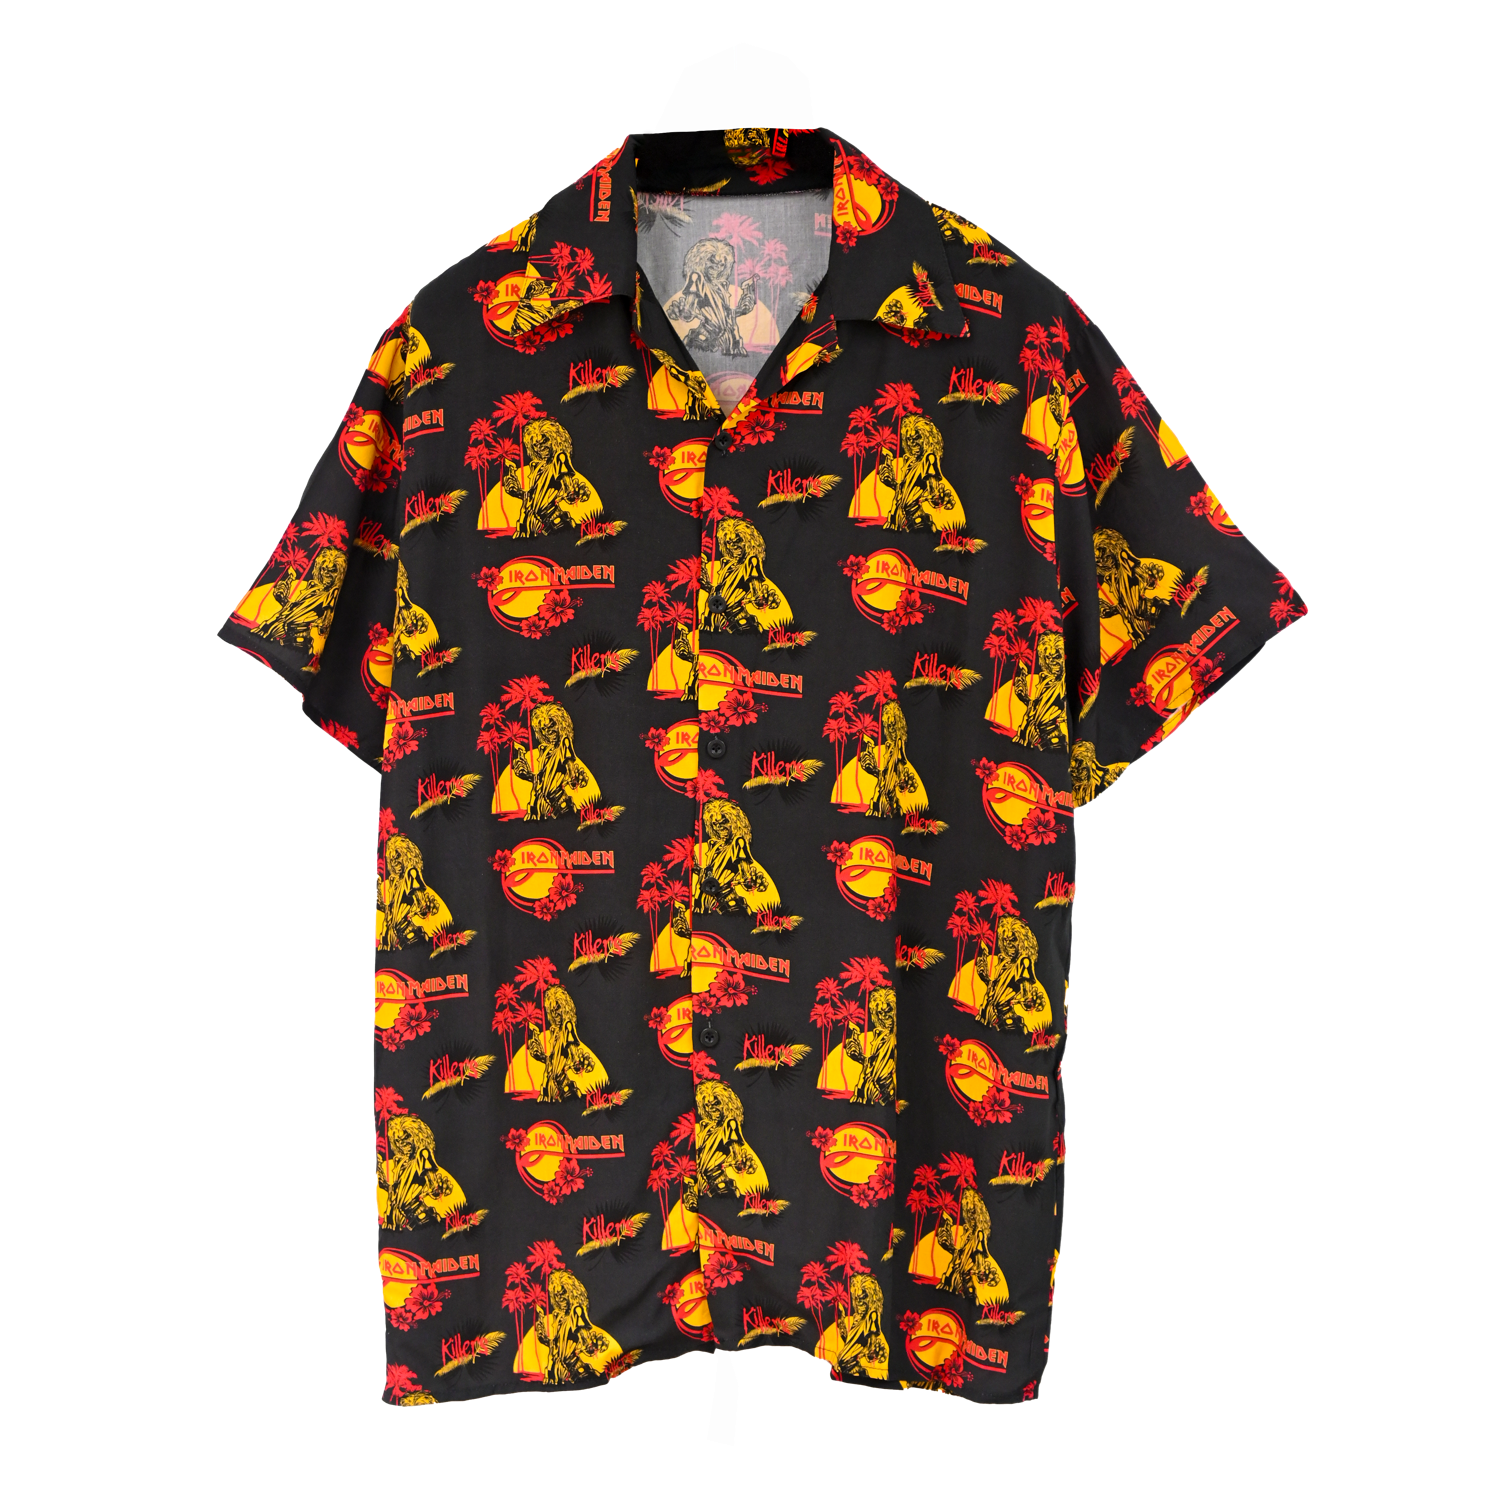 Camisas estampadas, ¿son de gilipollas? - Página 2 Killers-hawaiian-shirt?u=aHR0cHM6Ly9tdXNpY2dsdWUtdXNlci1hcHAtcC02LXAuczMuYW1hem9uYXdzLmNvbS9vcmlnaW5hbHMvMzA5MDJmNzQtNDlkZi00OGUyLWE0MTMtOGE4NjdjM2I3OWYy&height=1500&mode=contain&width=2000&v=2